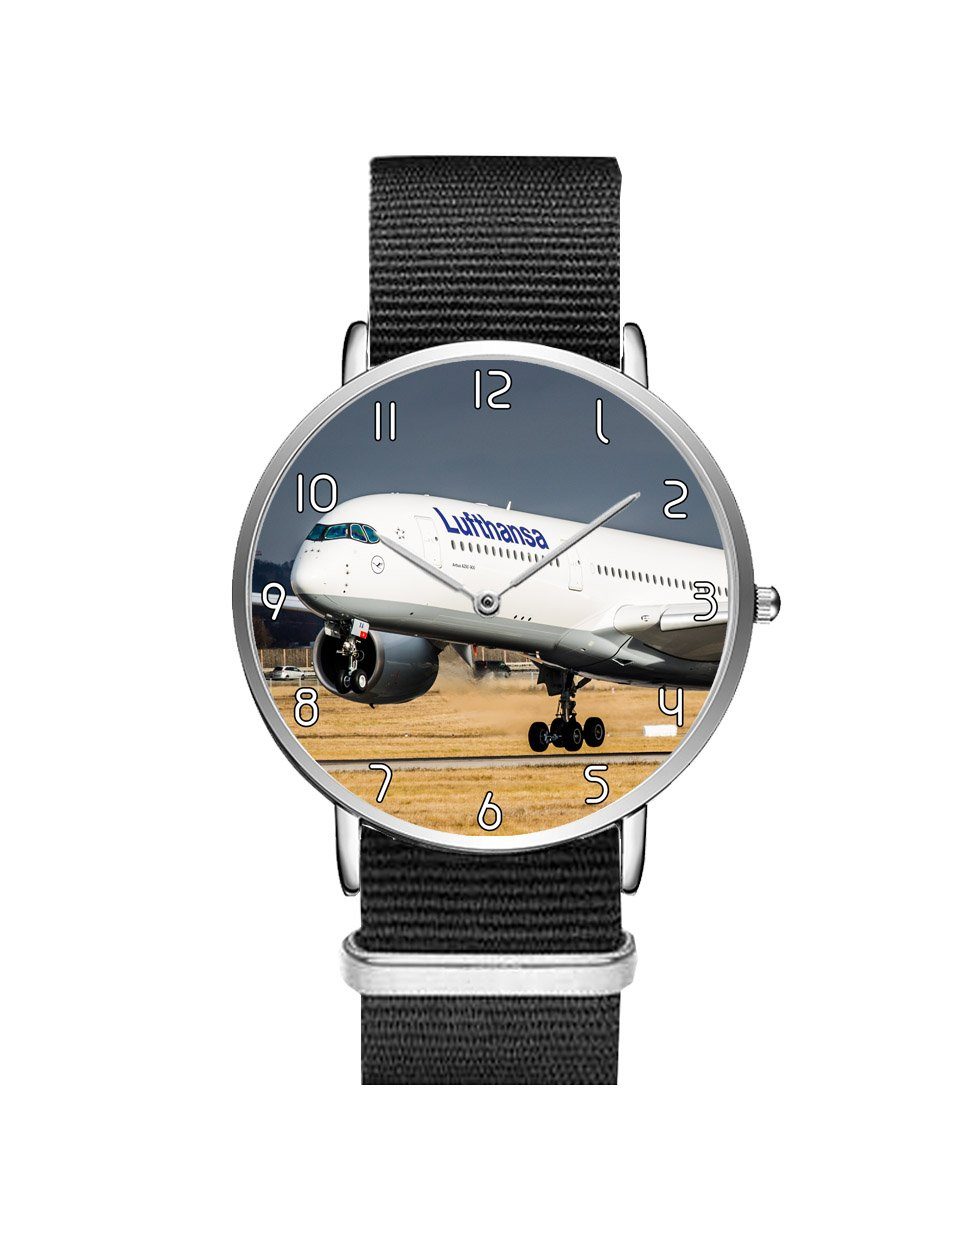 Lutfhansa A350 Printed Leather Strap Watches Aviation Shop Silver & Black Nylon Strap 